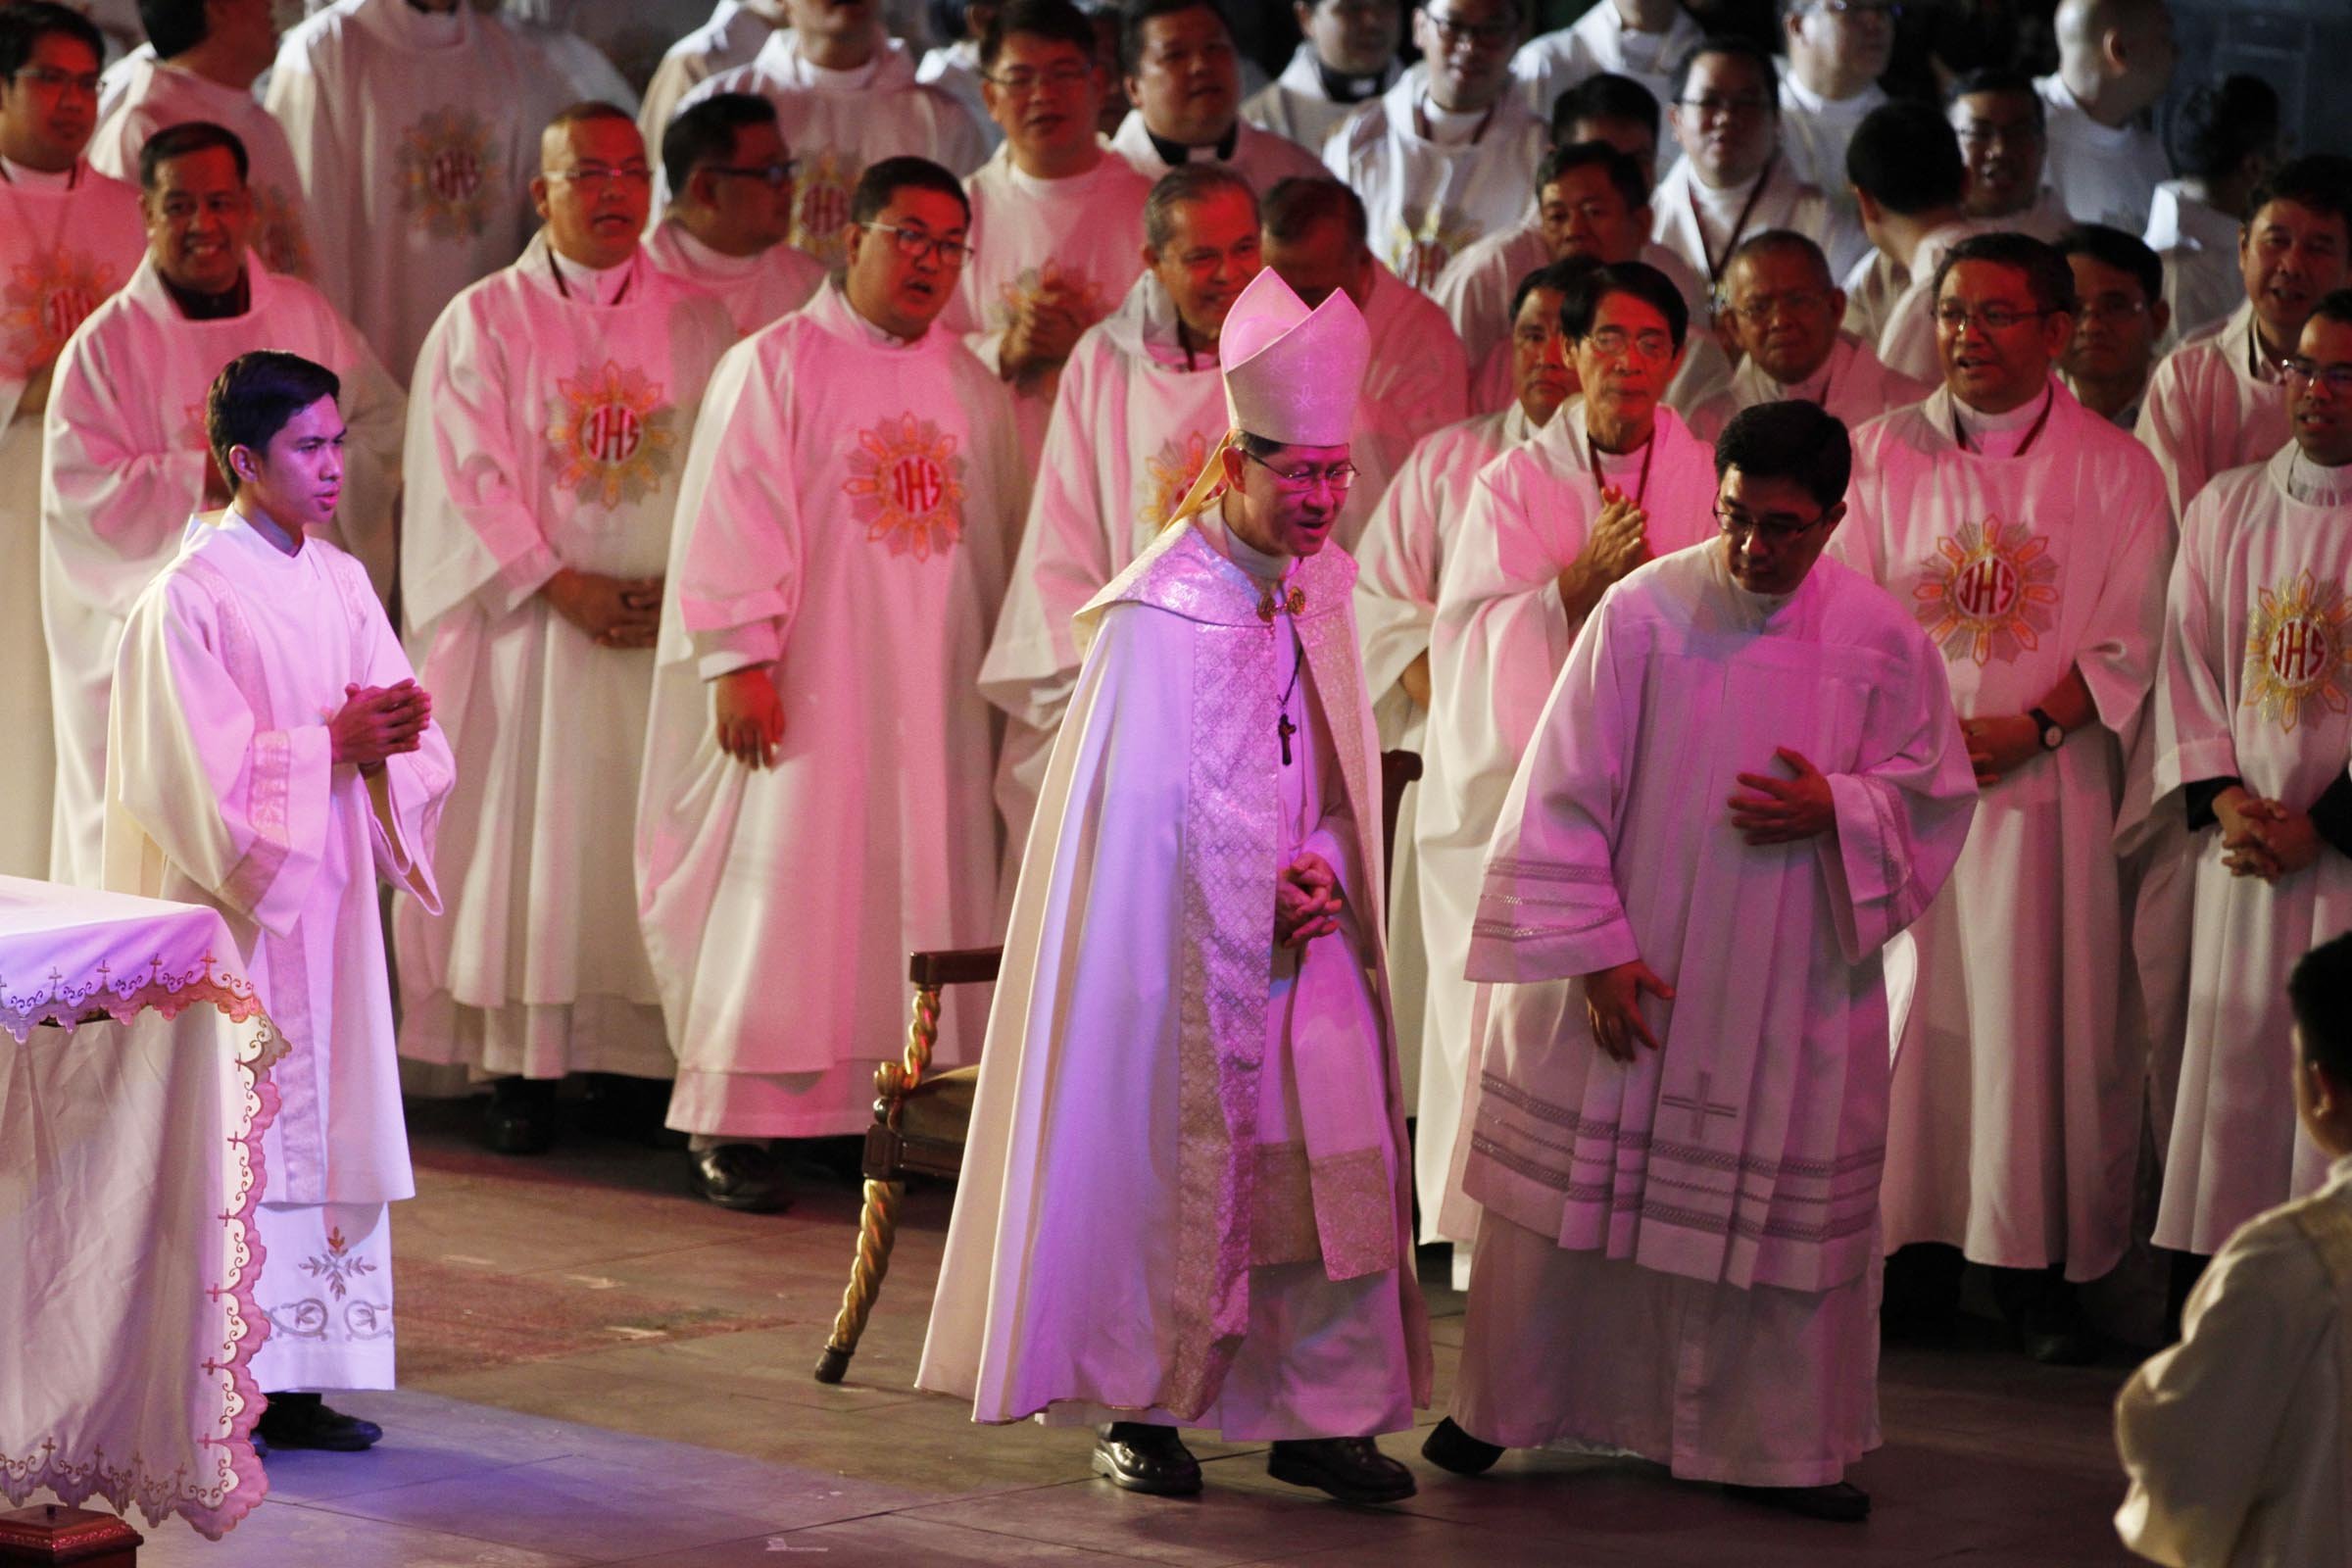 Manila Archbishop Luis Antonio G. Cardinal Tagle leads the mass during the Feast of the Black Nazarene 2017